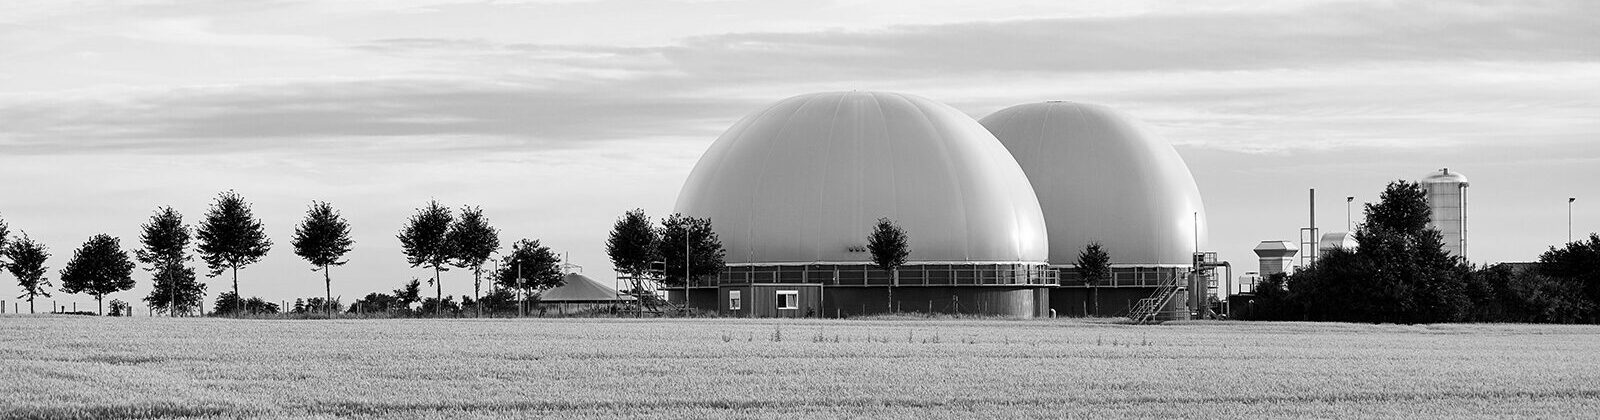 Biogas-tank-energy